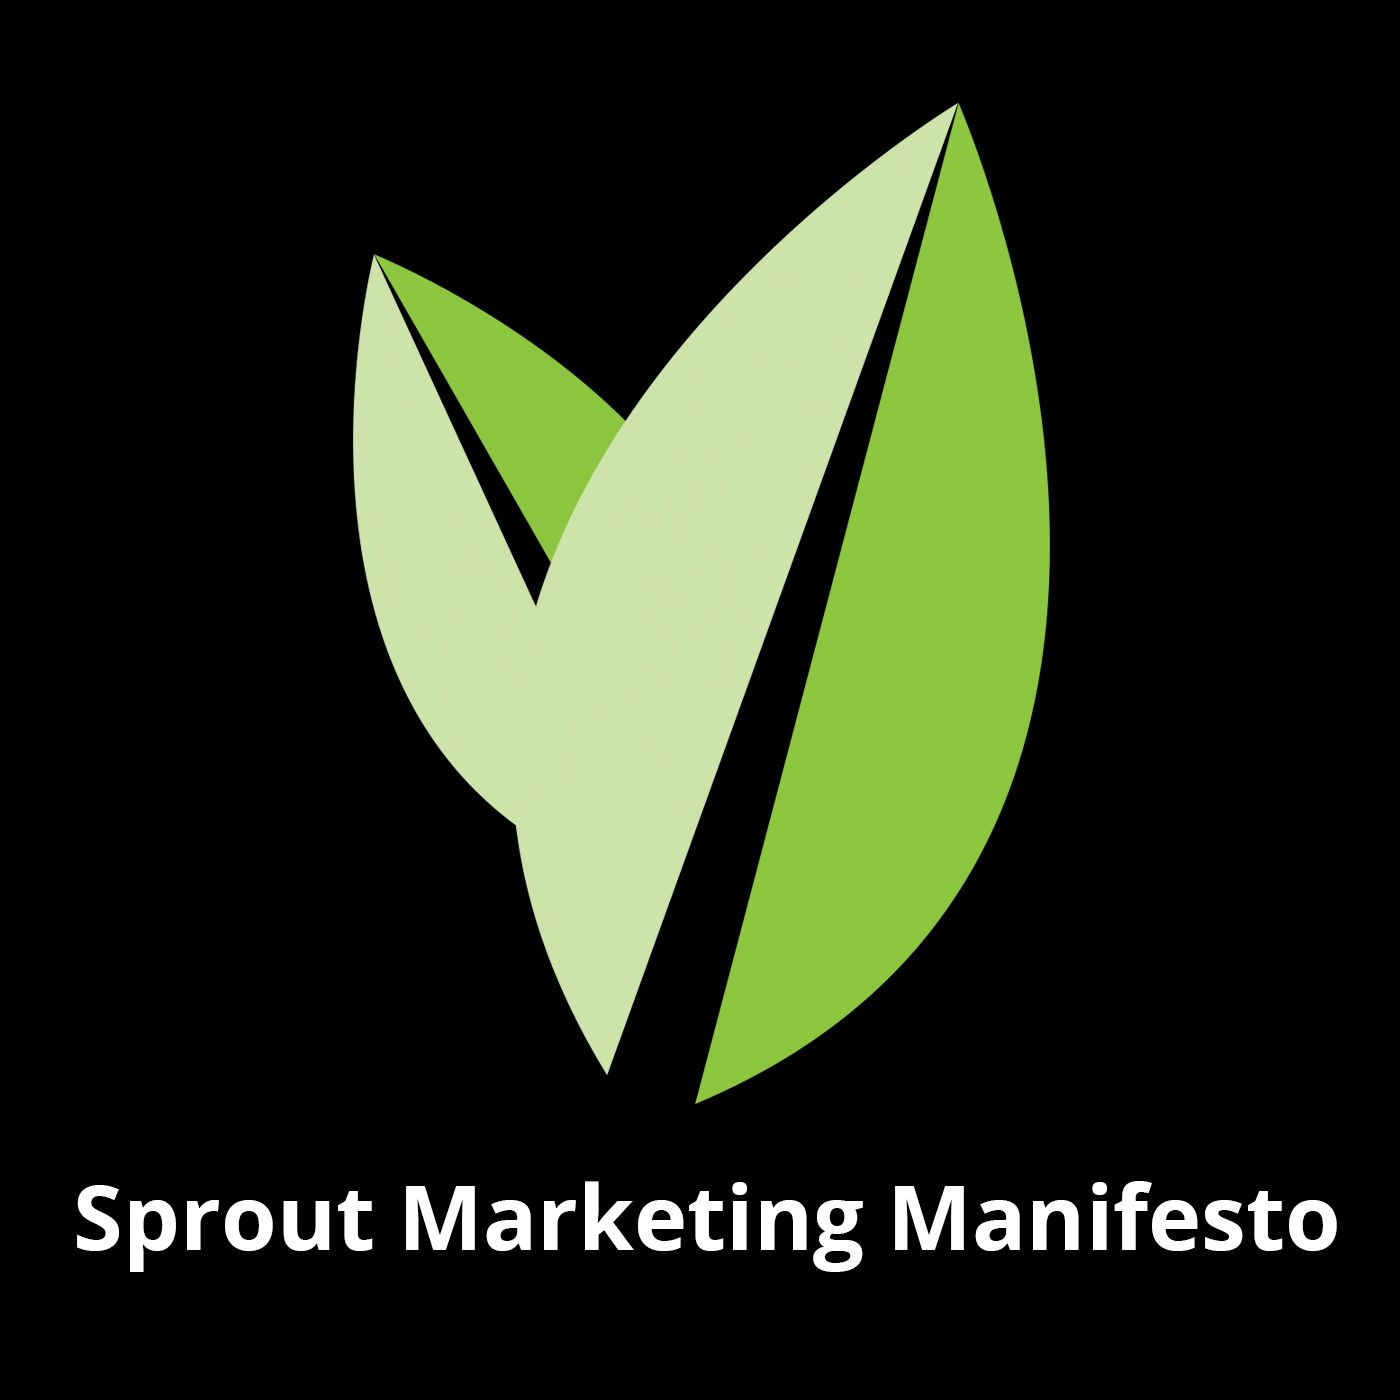 Sprout Marketing Manifesto